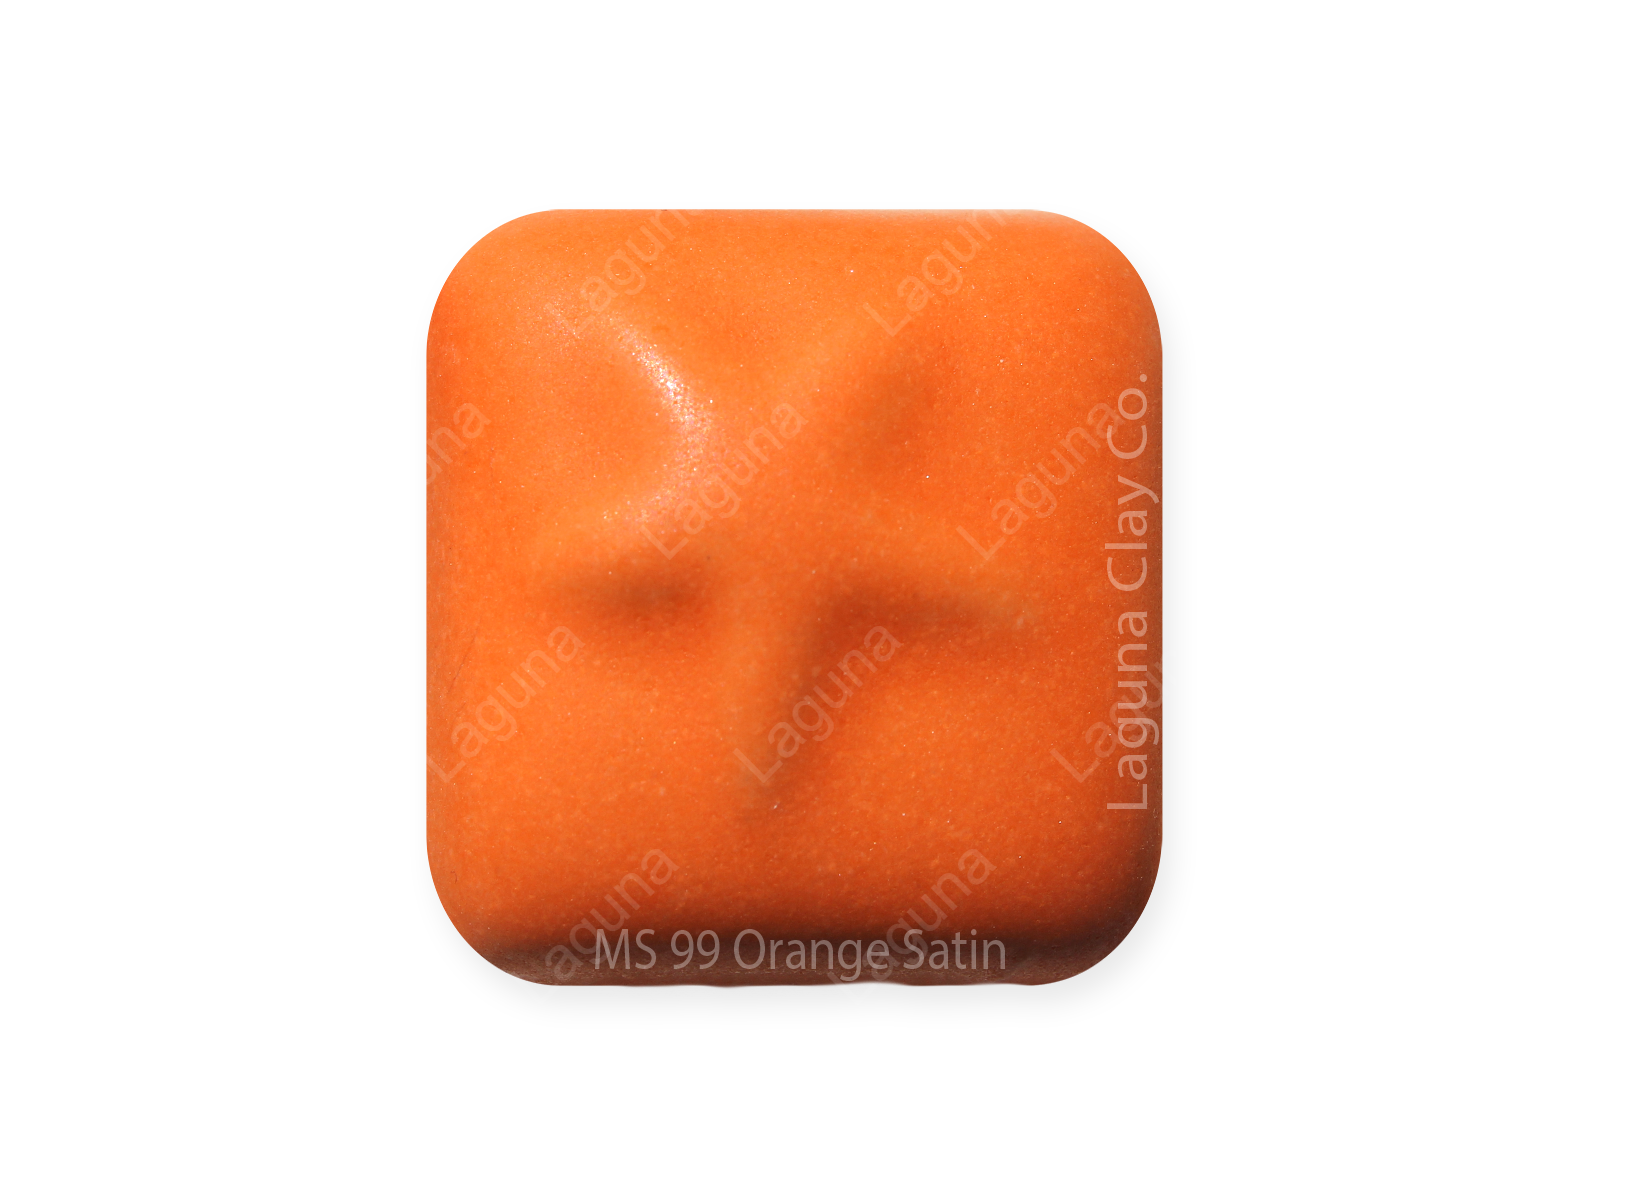 Orange Satin MS99